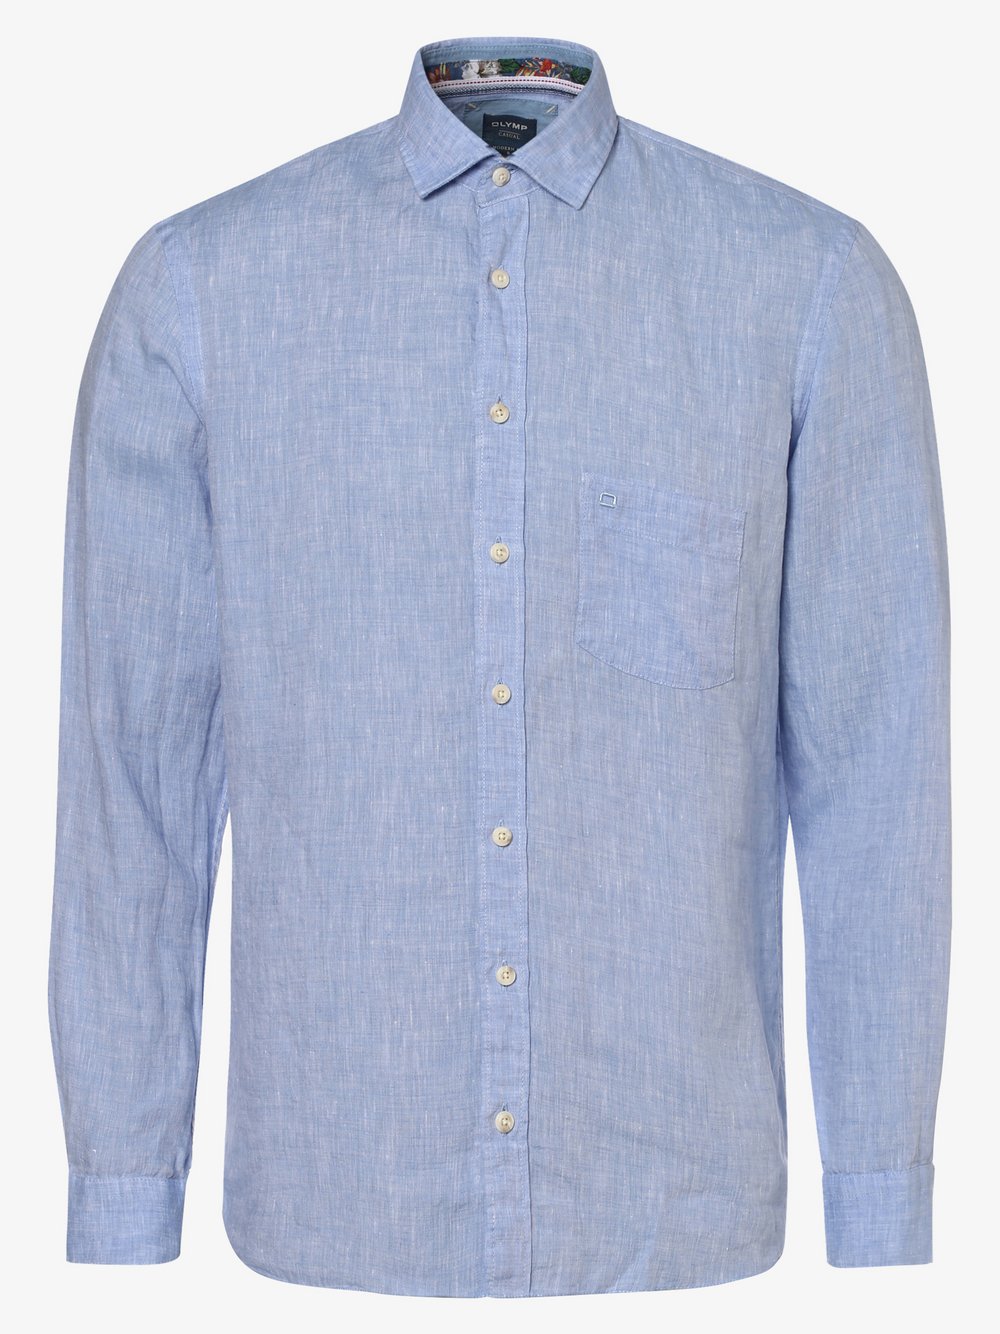 OLYMP Casual modern fit - Męska koszula lniana, niebieski